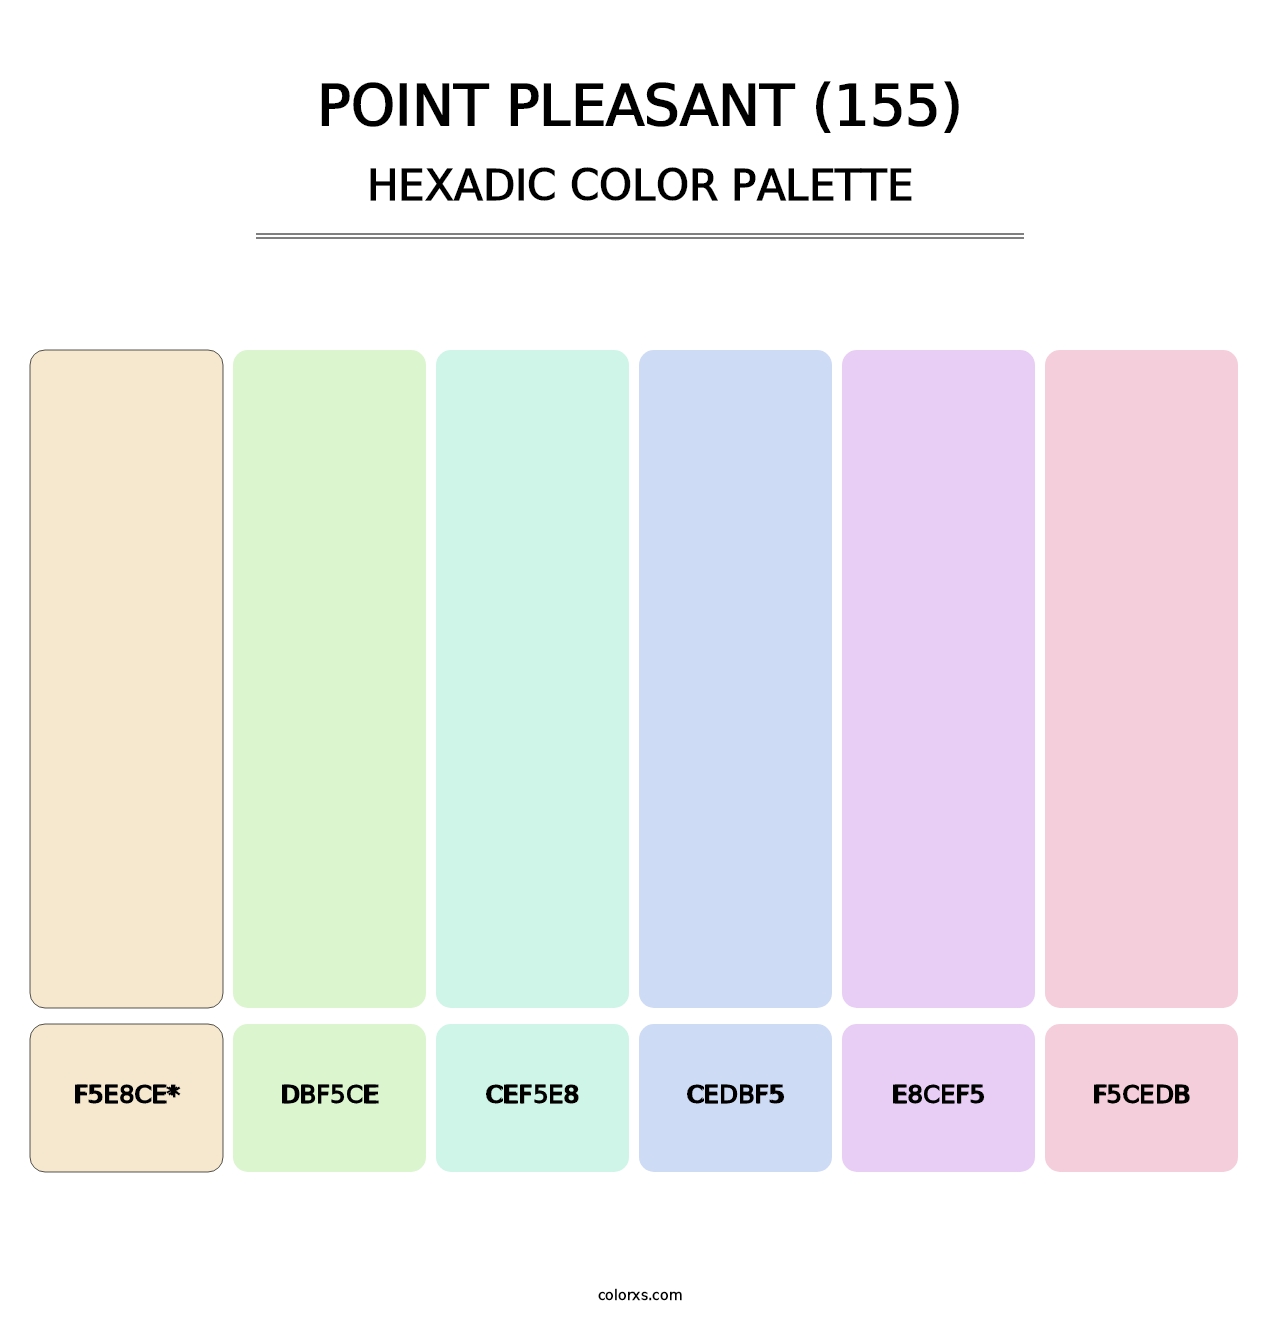 Point Pleasant (155) - Hexadic Color Palette